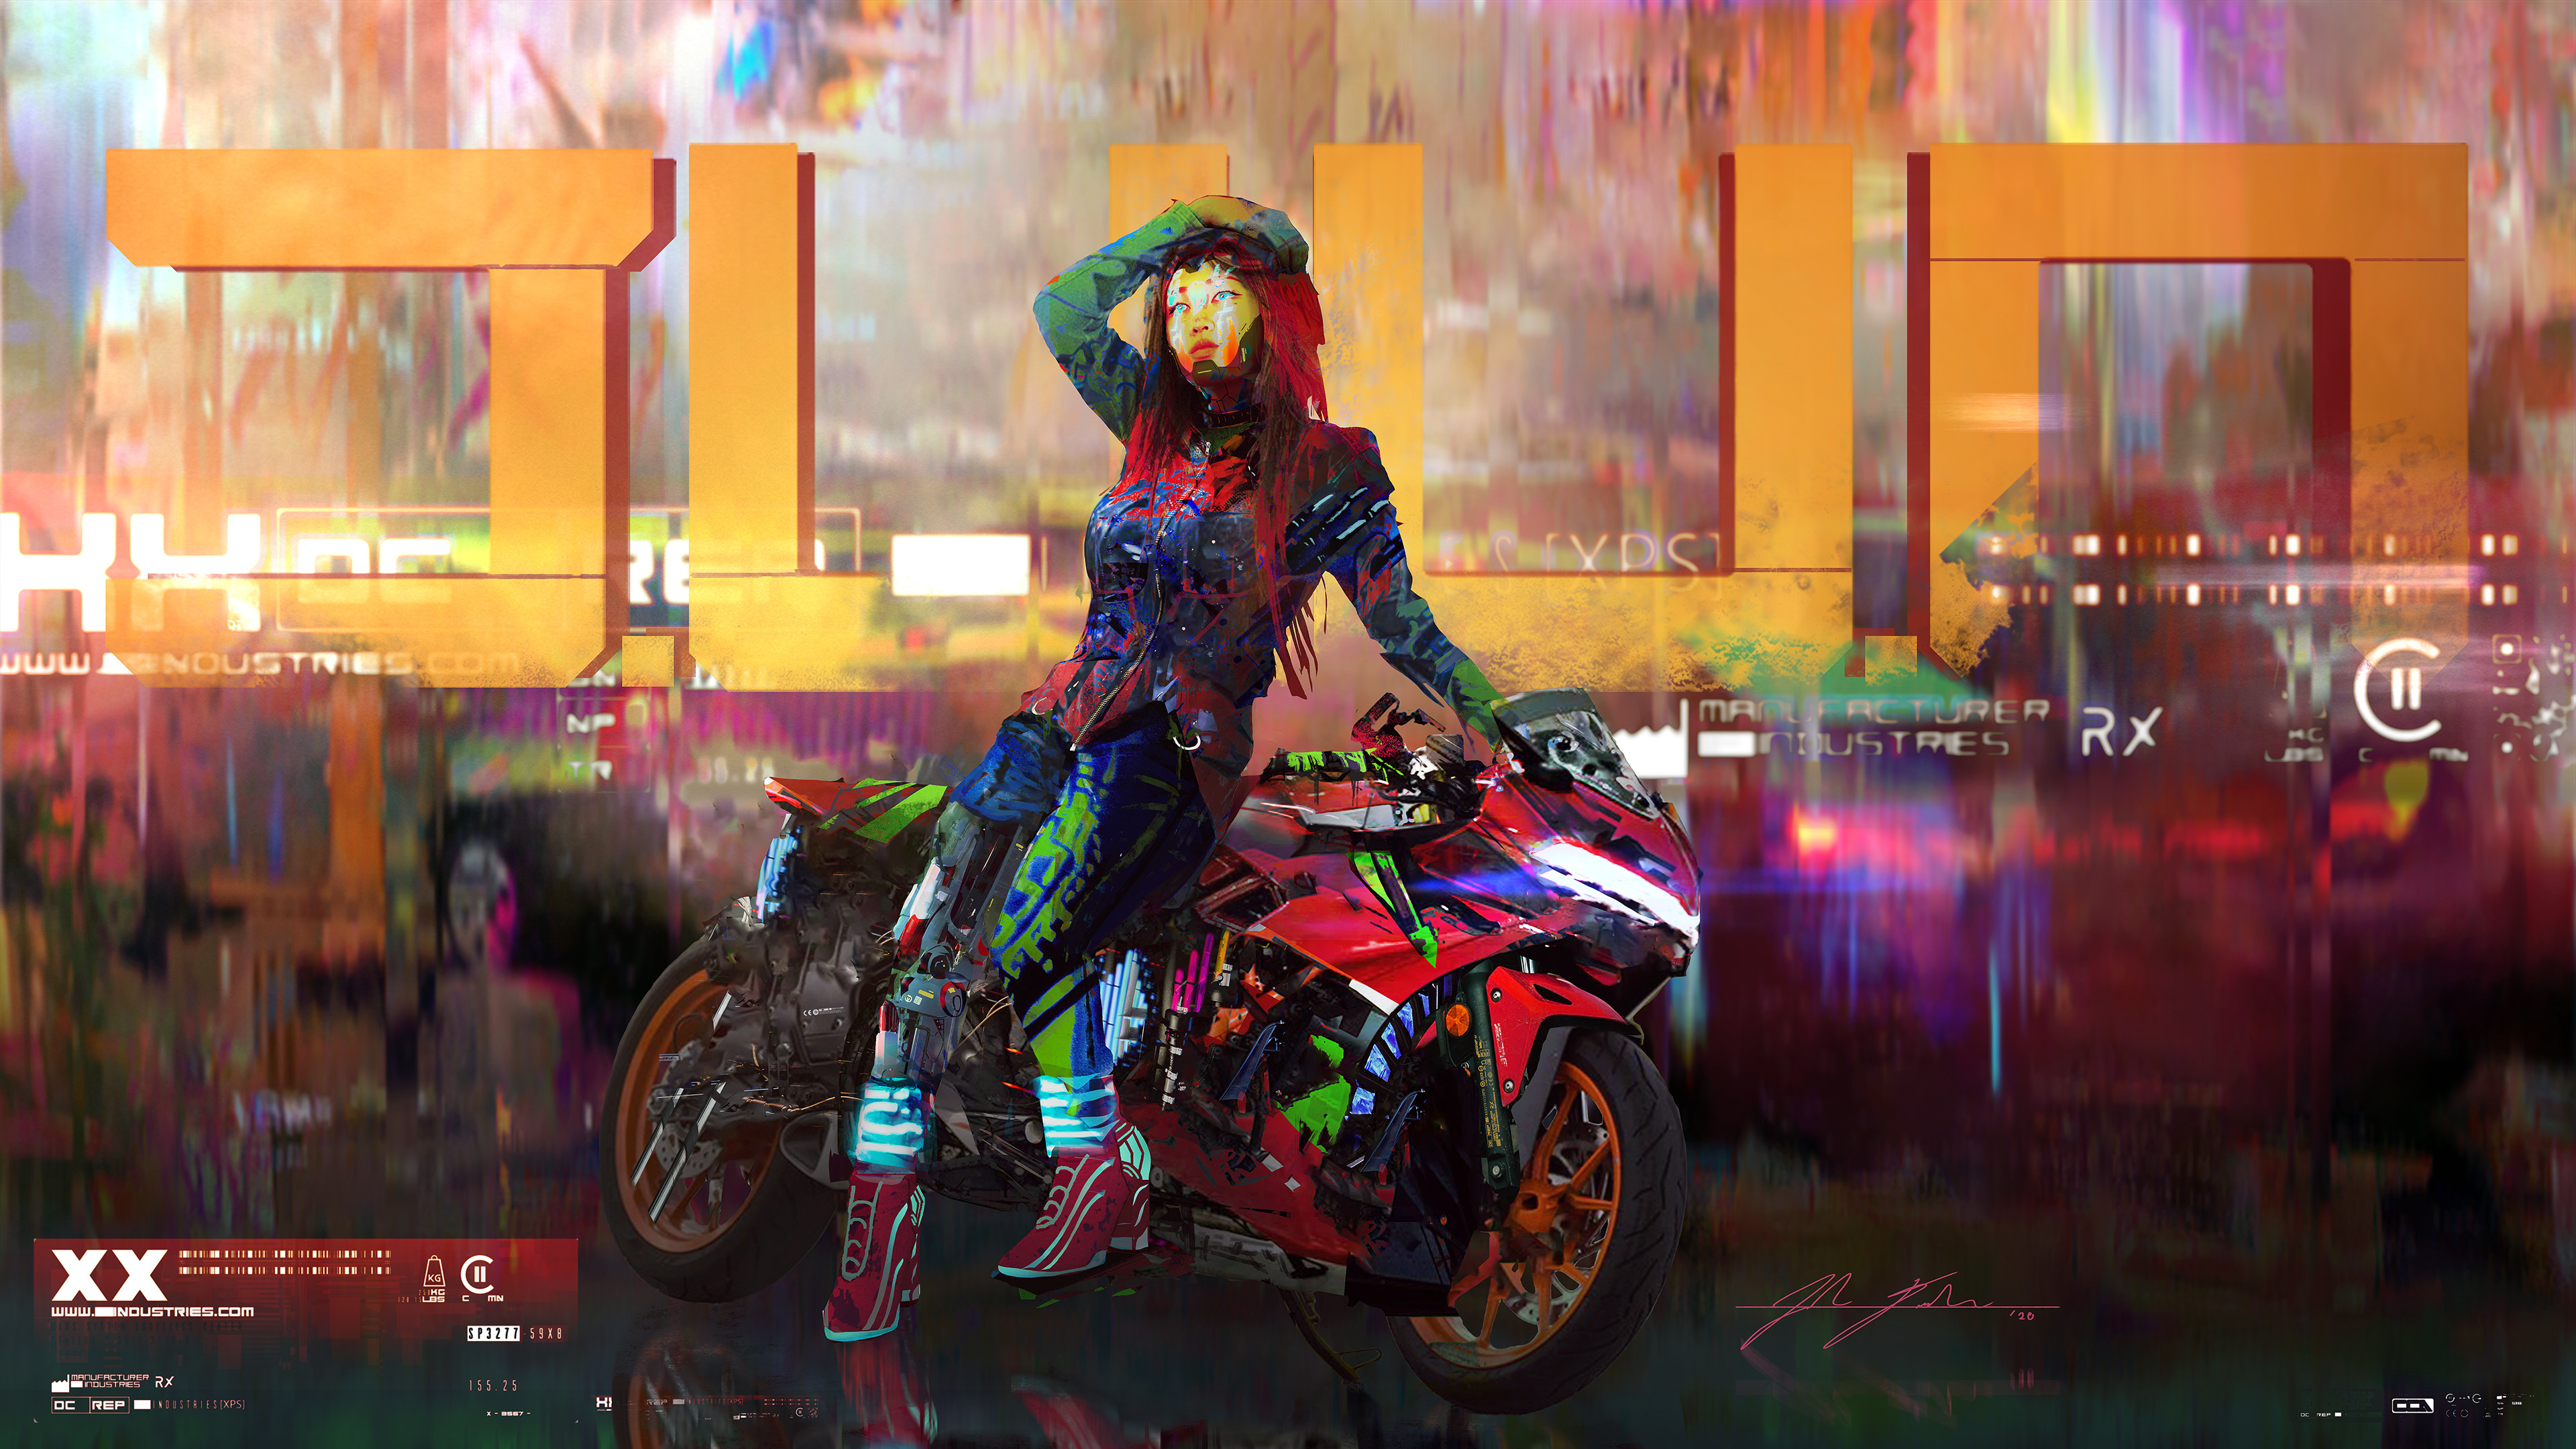 Video Game Cyberpunk 2077 4k Ultra HD Wallpaper by Natty Dread